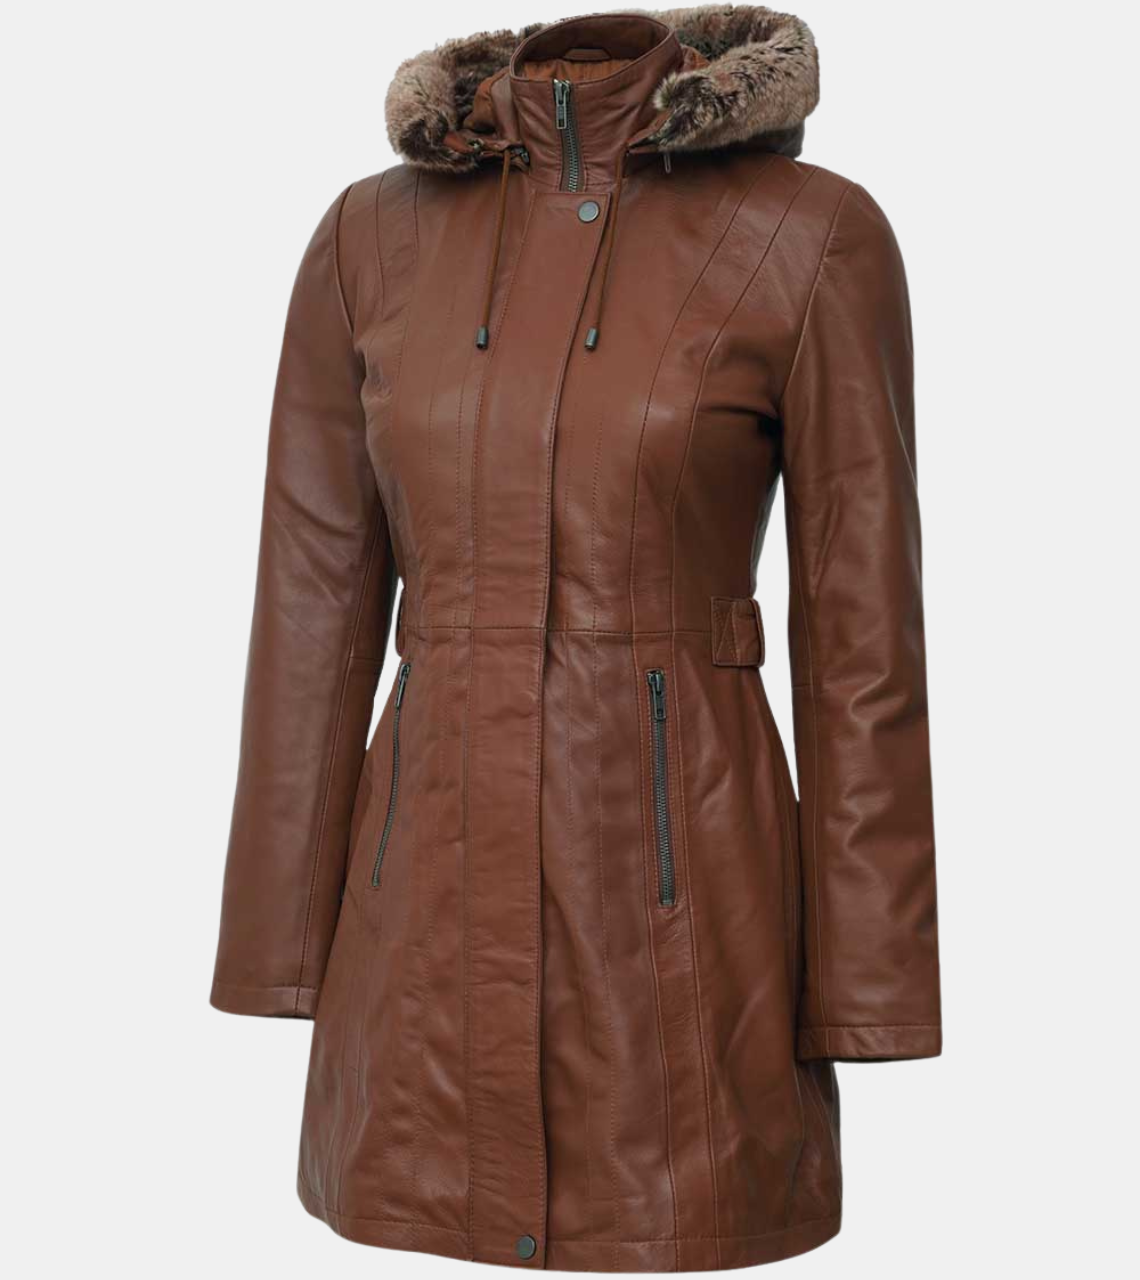 Tan Brown Leather Coat